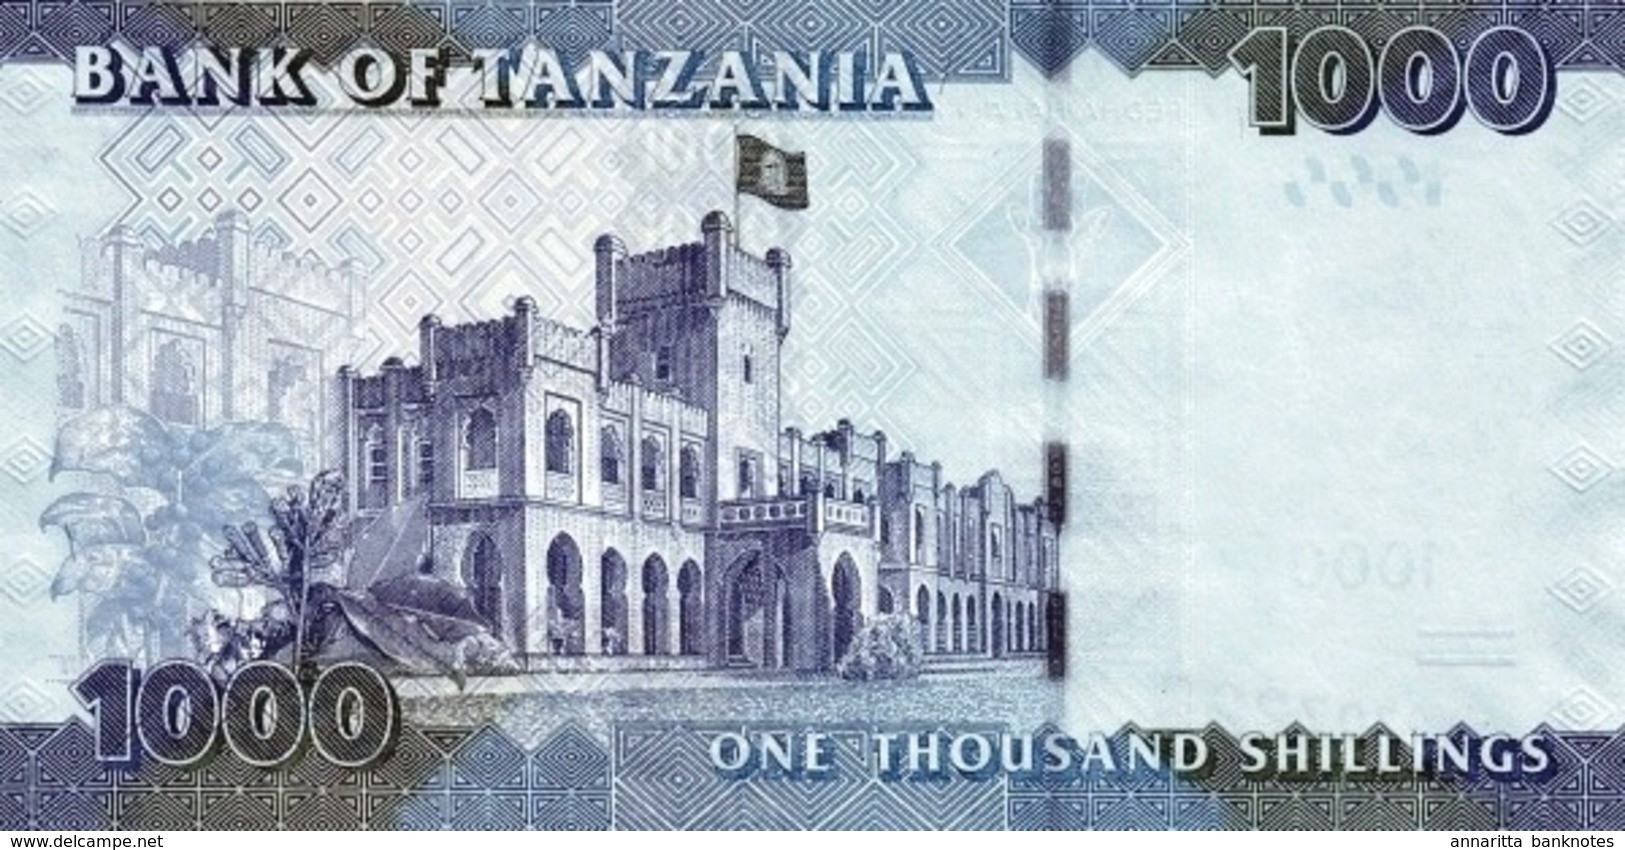 Tanzania (BOT) 1000 Shillings ND (2011) UNC Cat No. P-41a / TZ140a - Tanzania